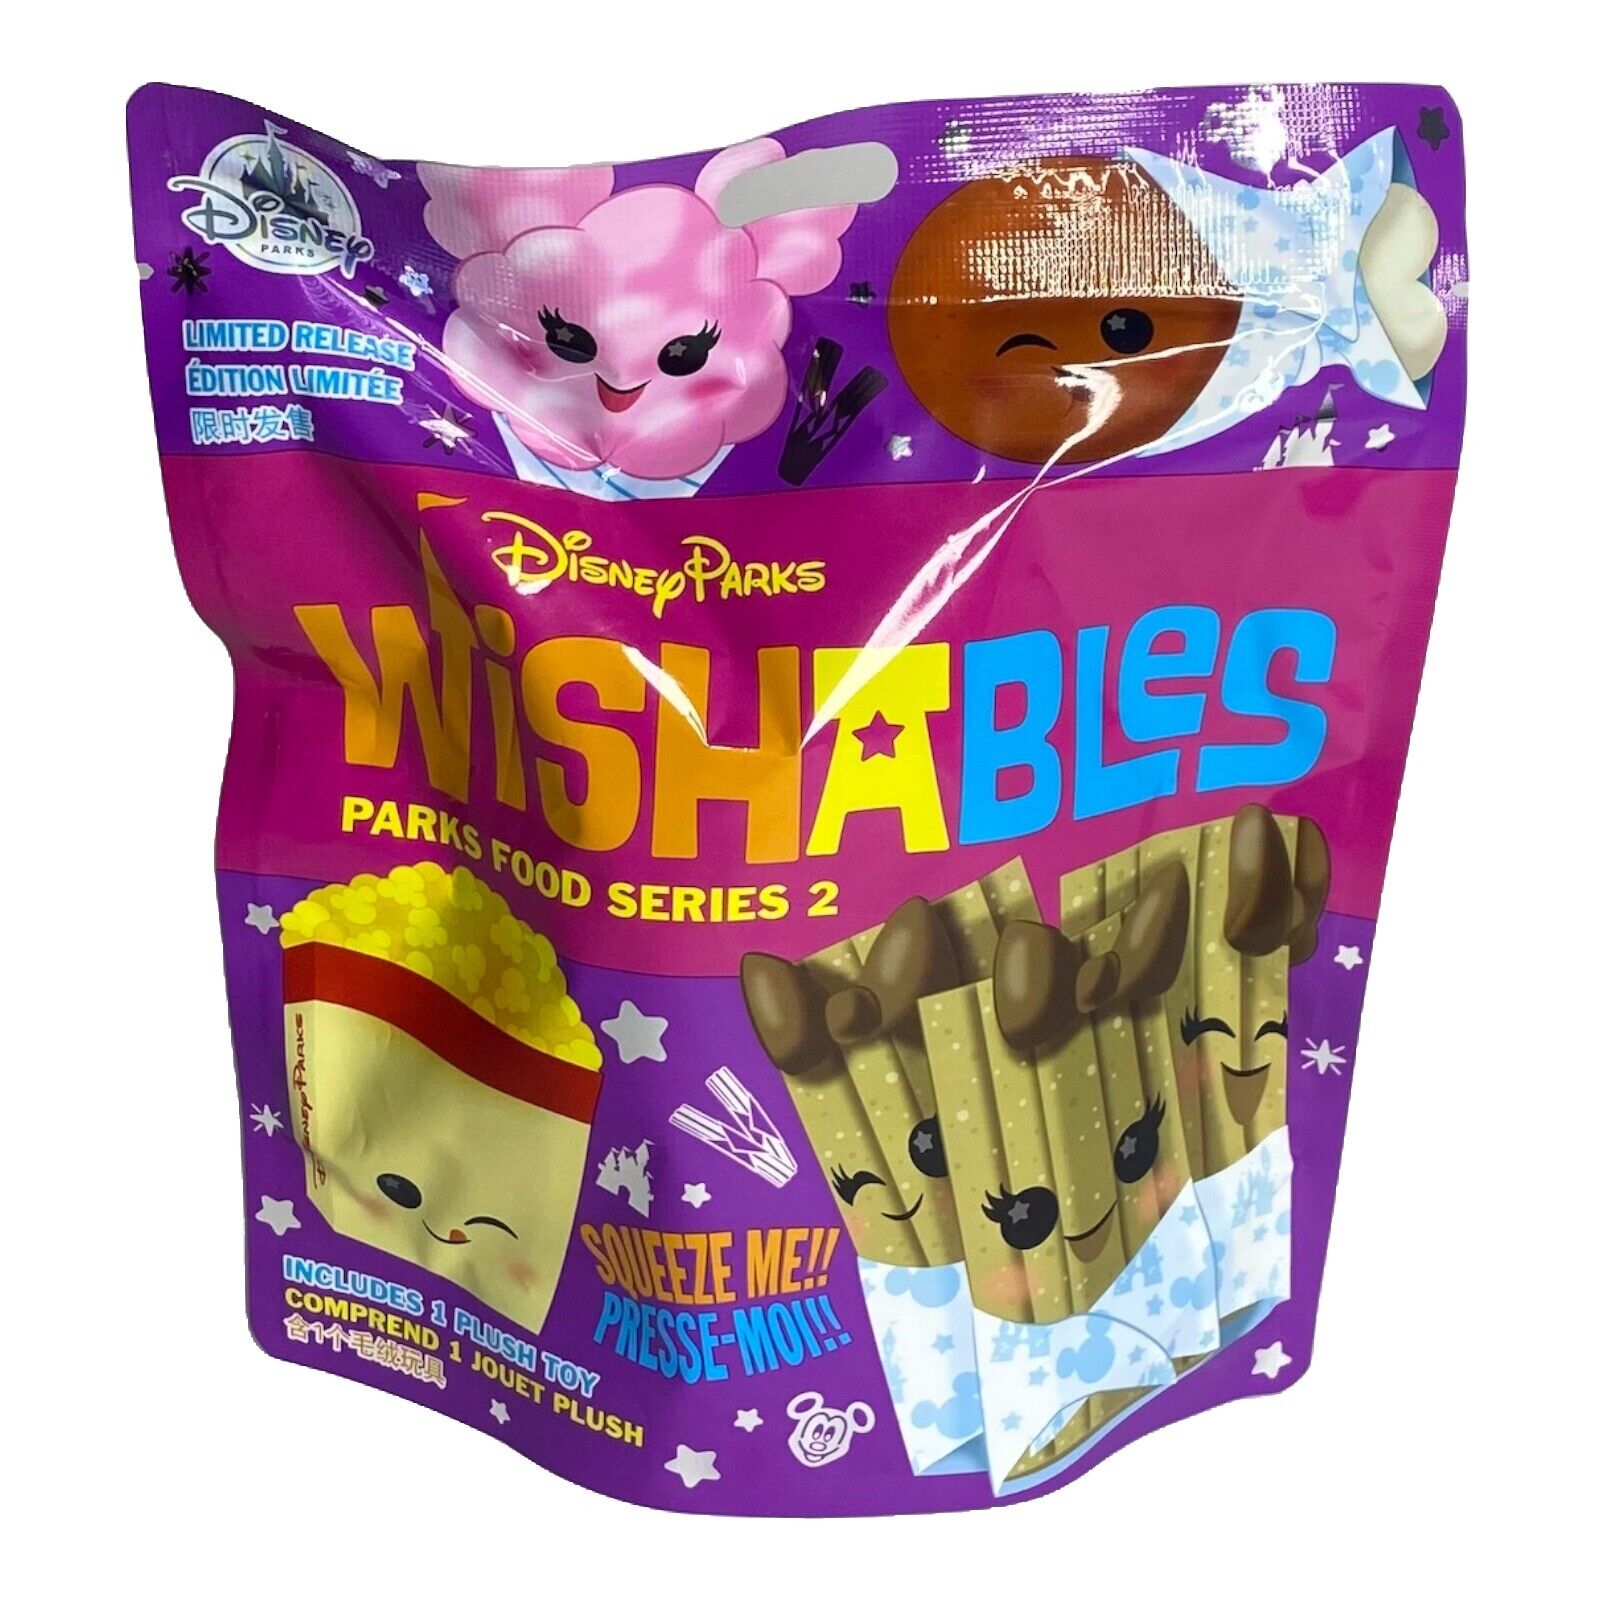 Disney Parks Wishables Parks Food Series 2 Mystery Plush - Sealed Bag